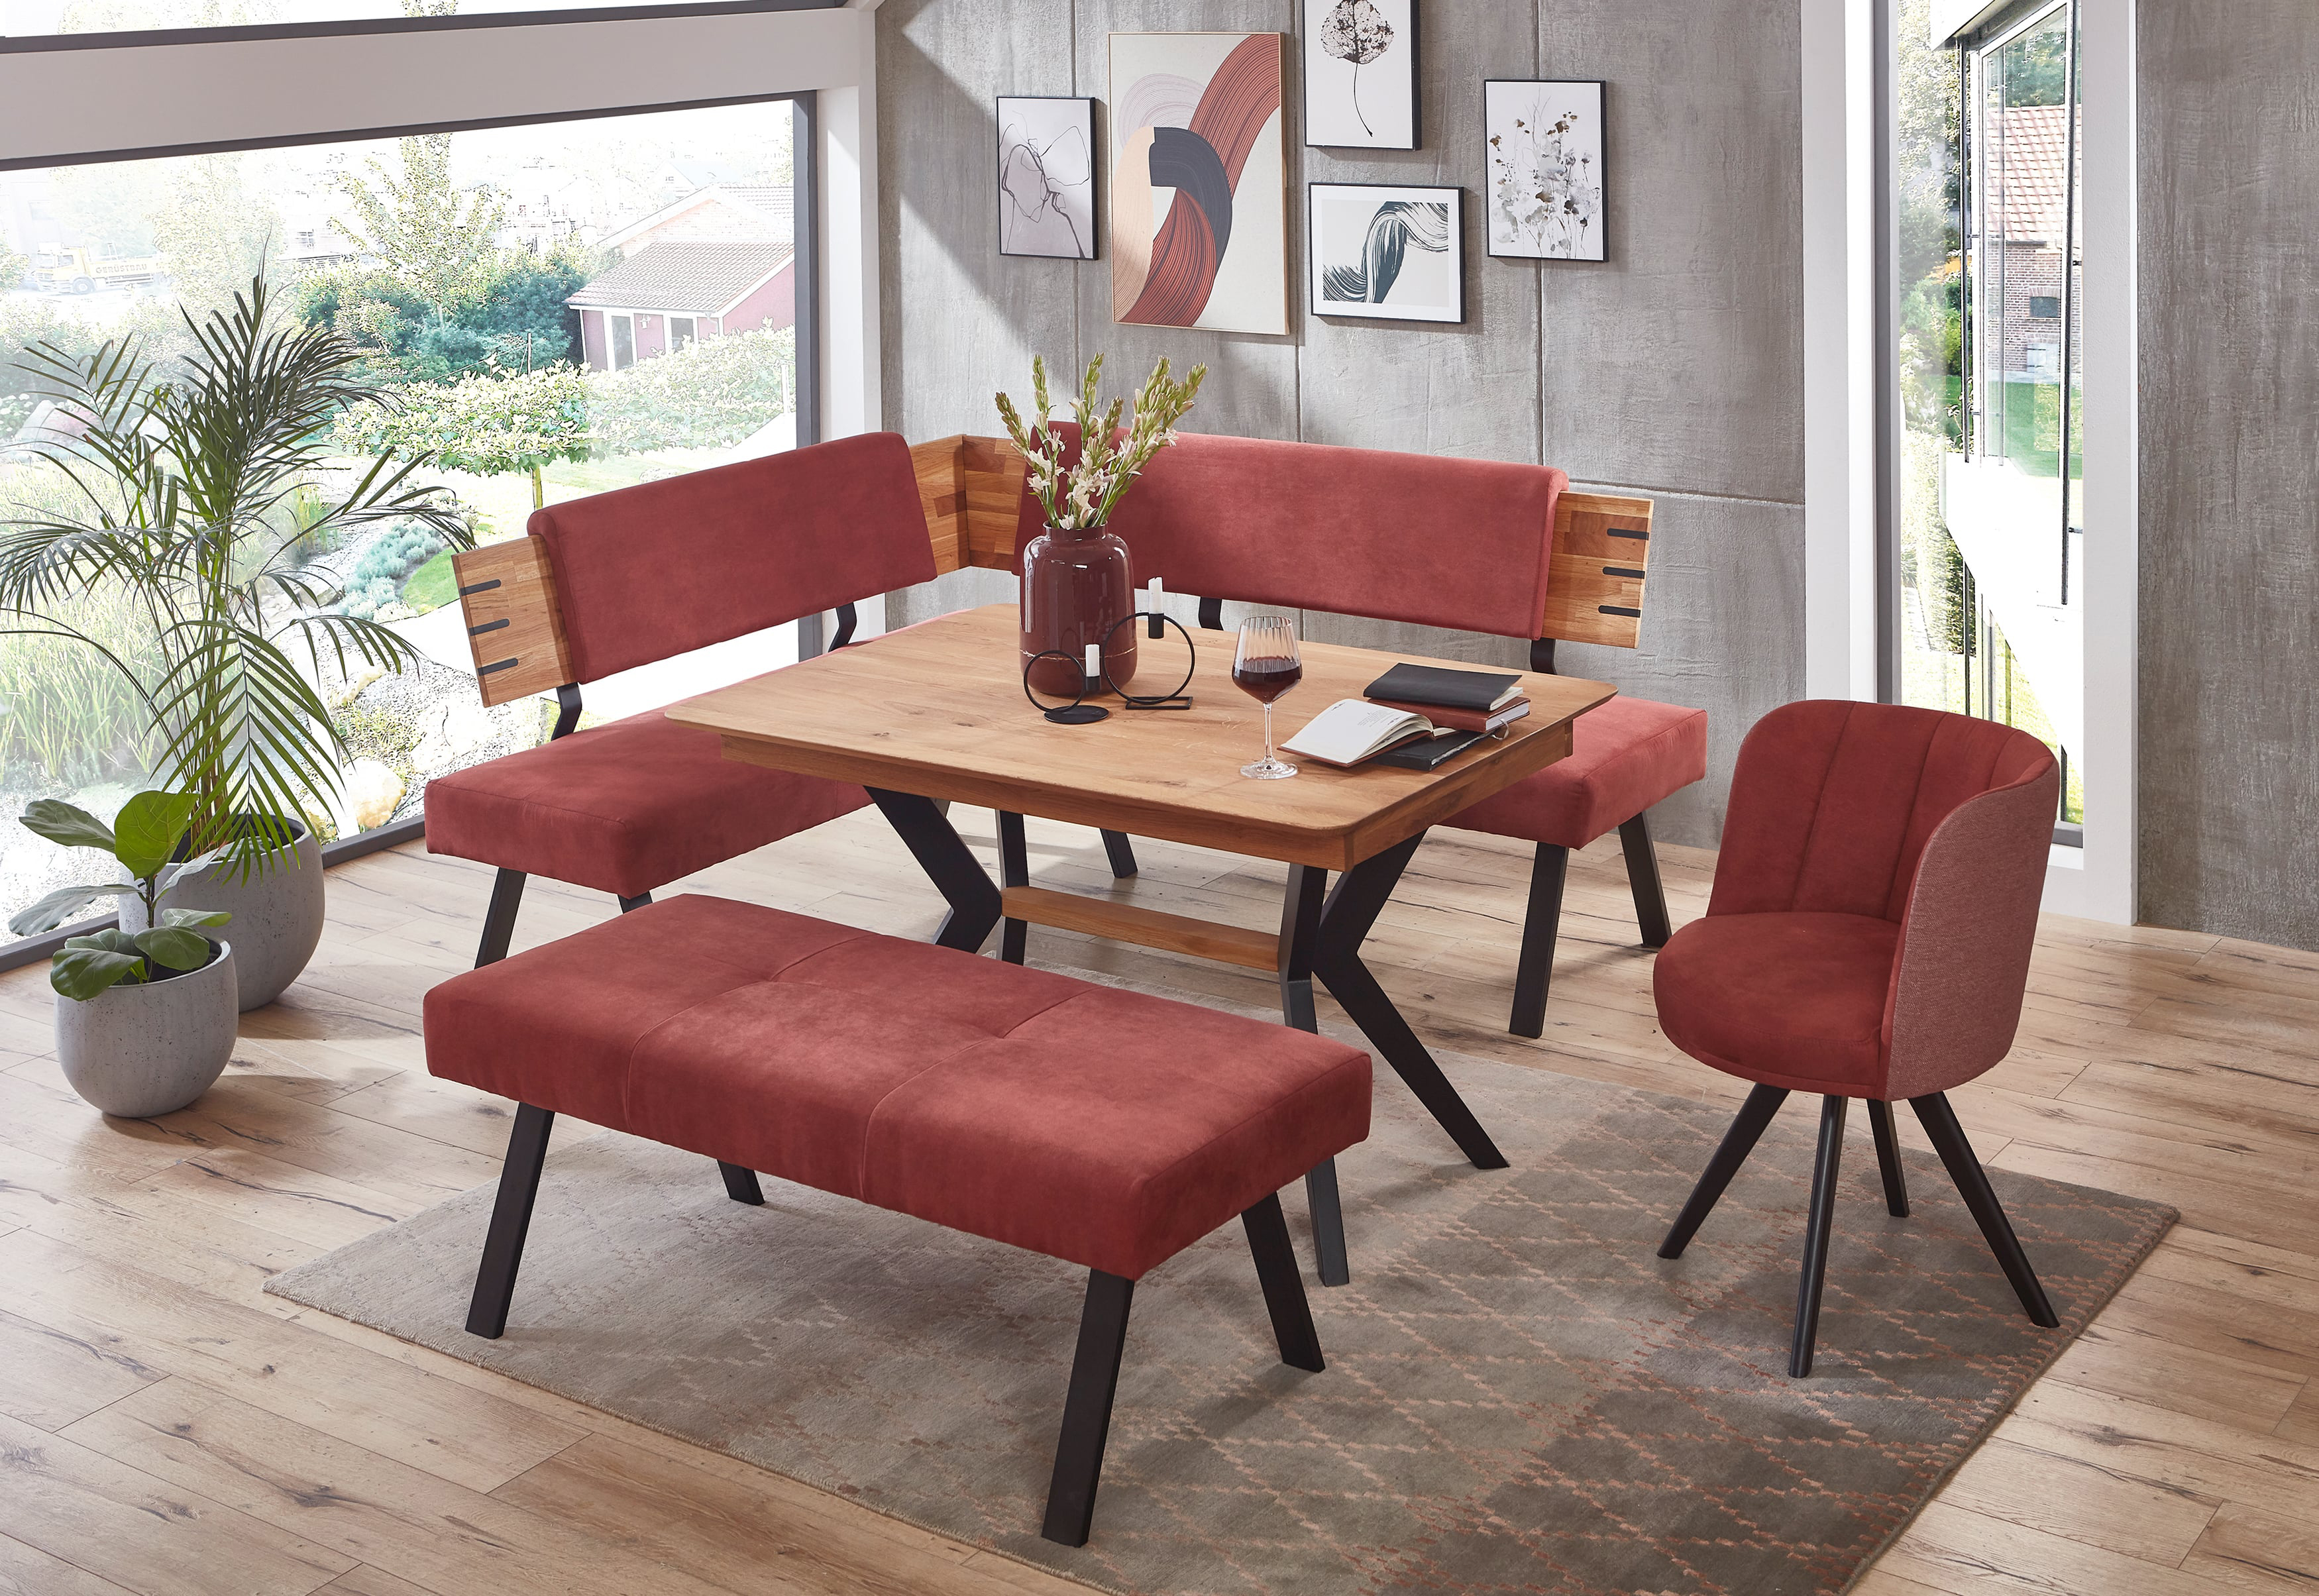 Standard Furniture Cortina Eckbankgruppe madssiv eiche rustikal mit Stuhl Palma